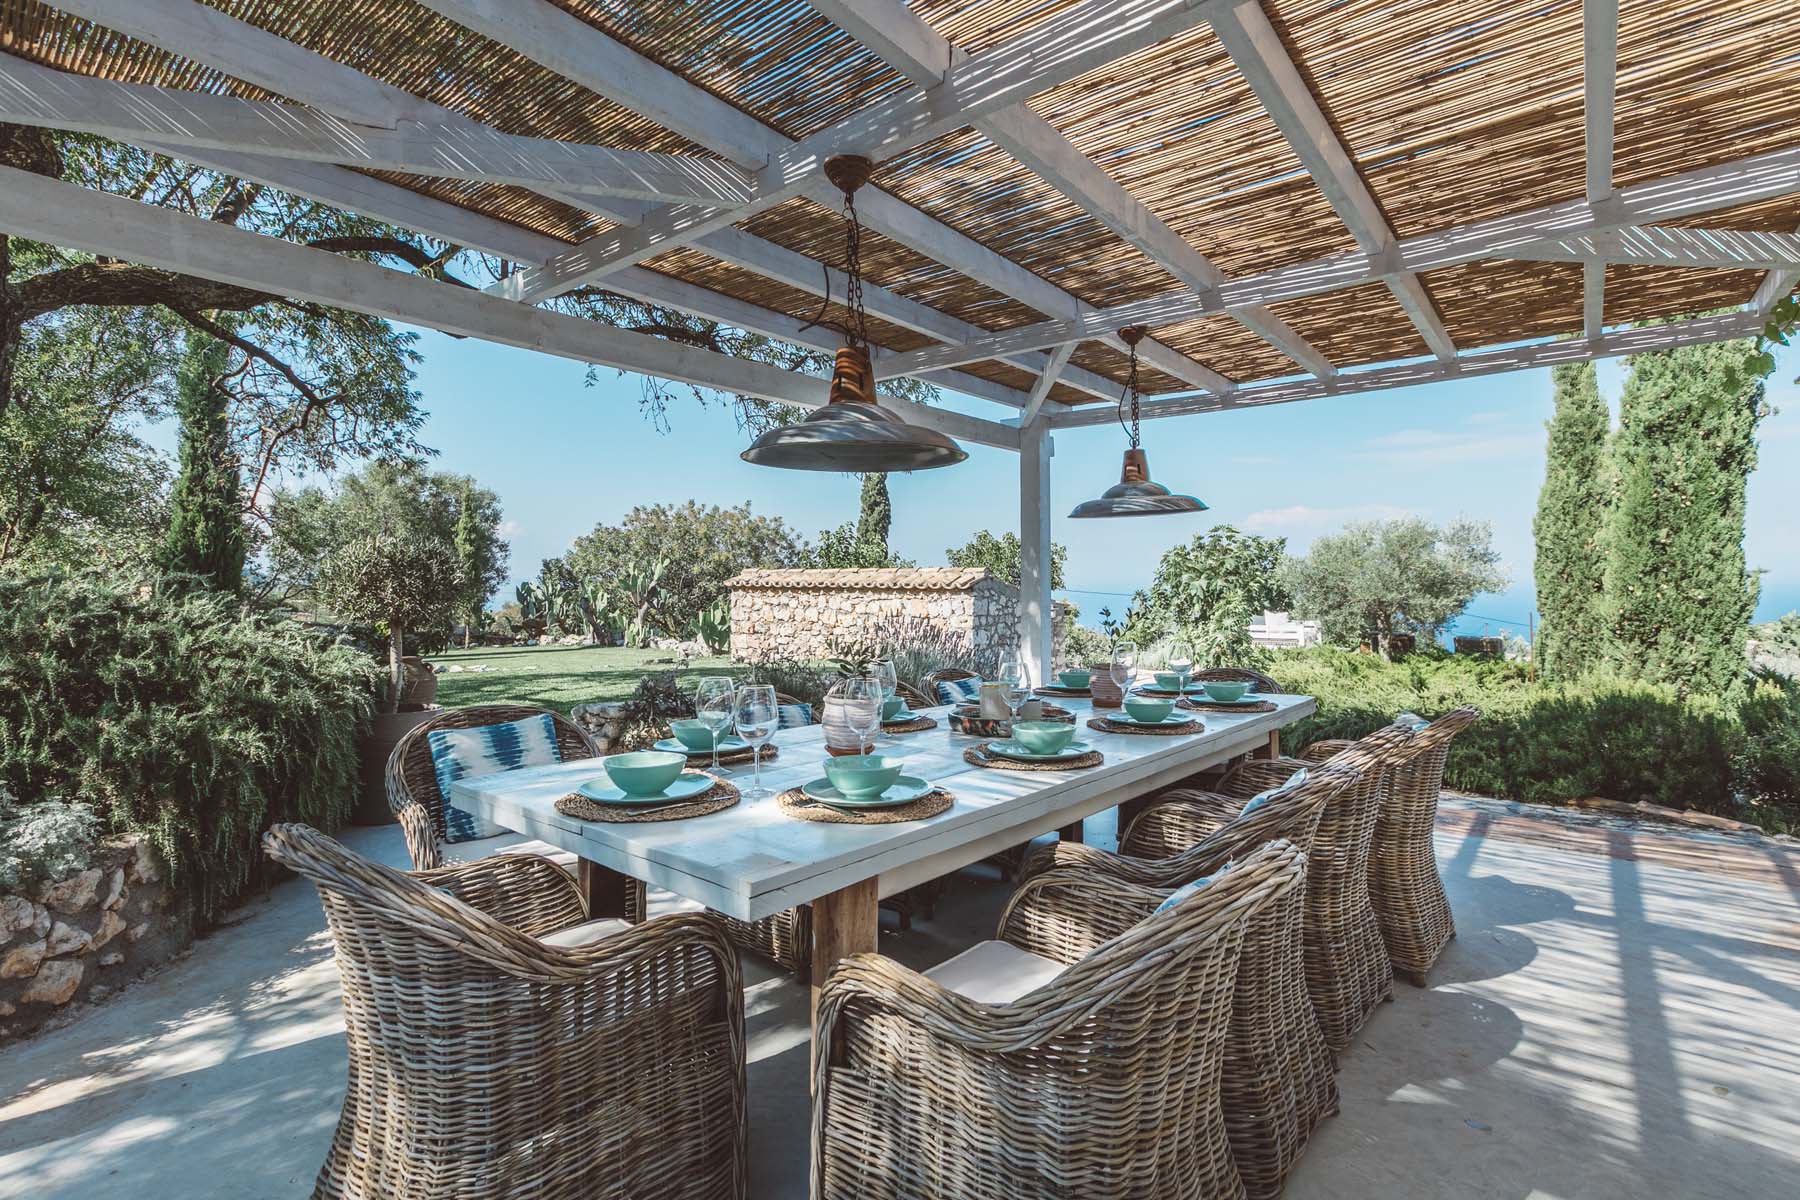 https://www.peligoni.com/wp-content/uploads/2019/12/Copy-of-230618-Peligoni-June-2018-HALCYON-Outdoor-Dining-Table-1.jpg